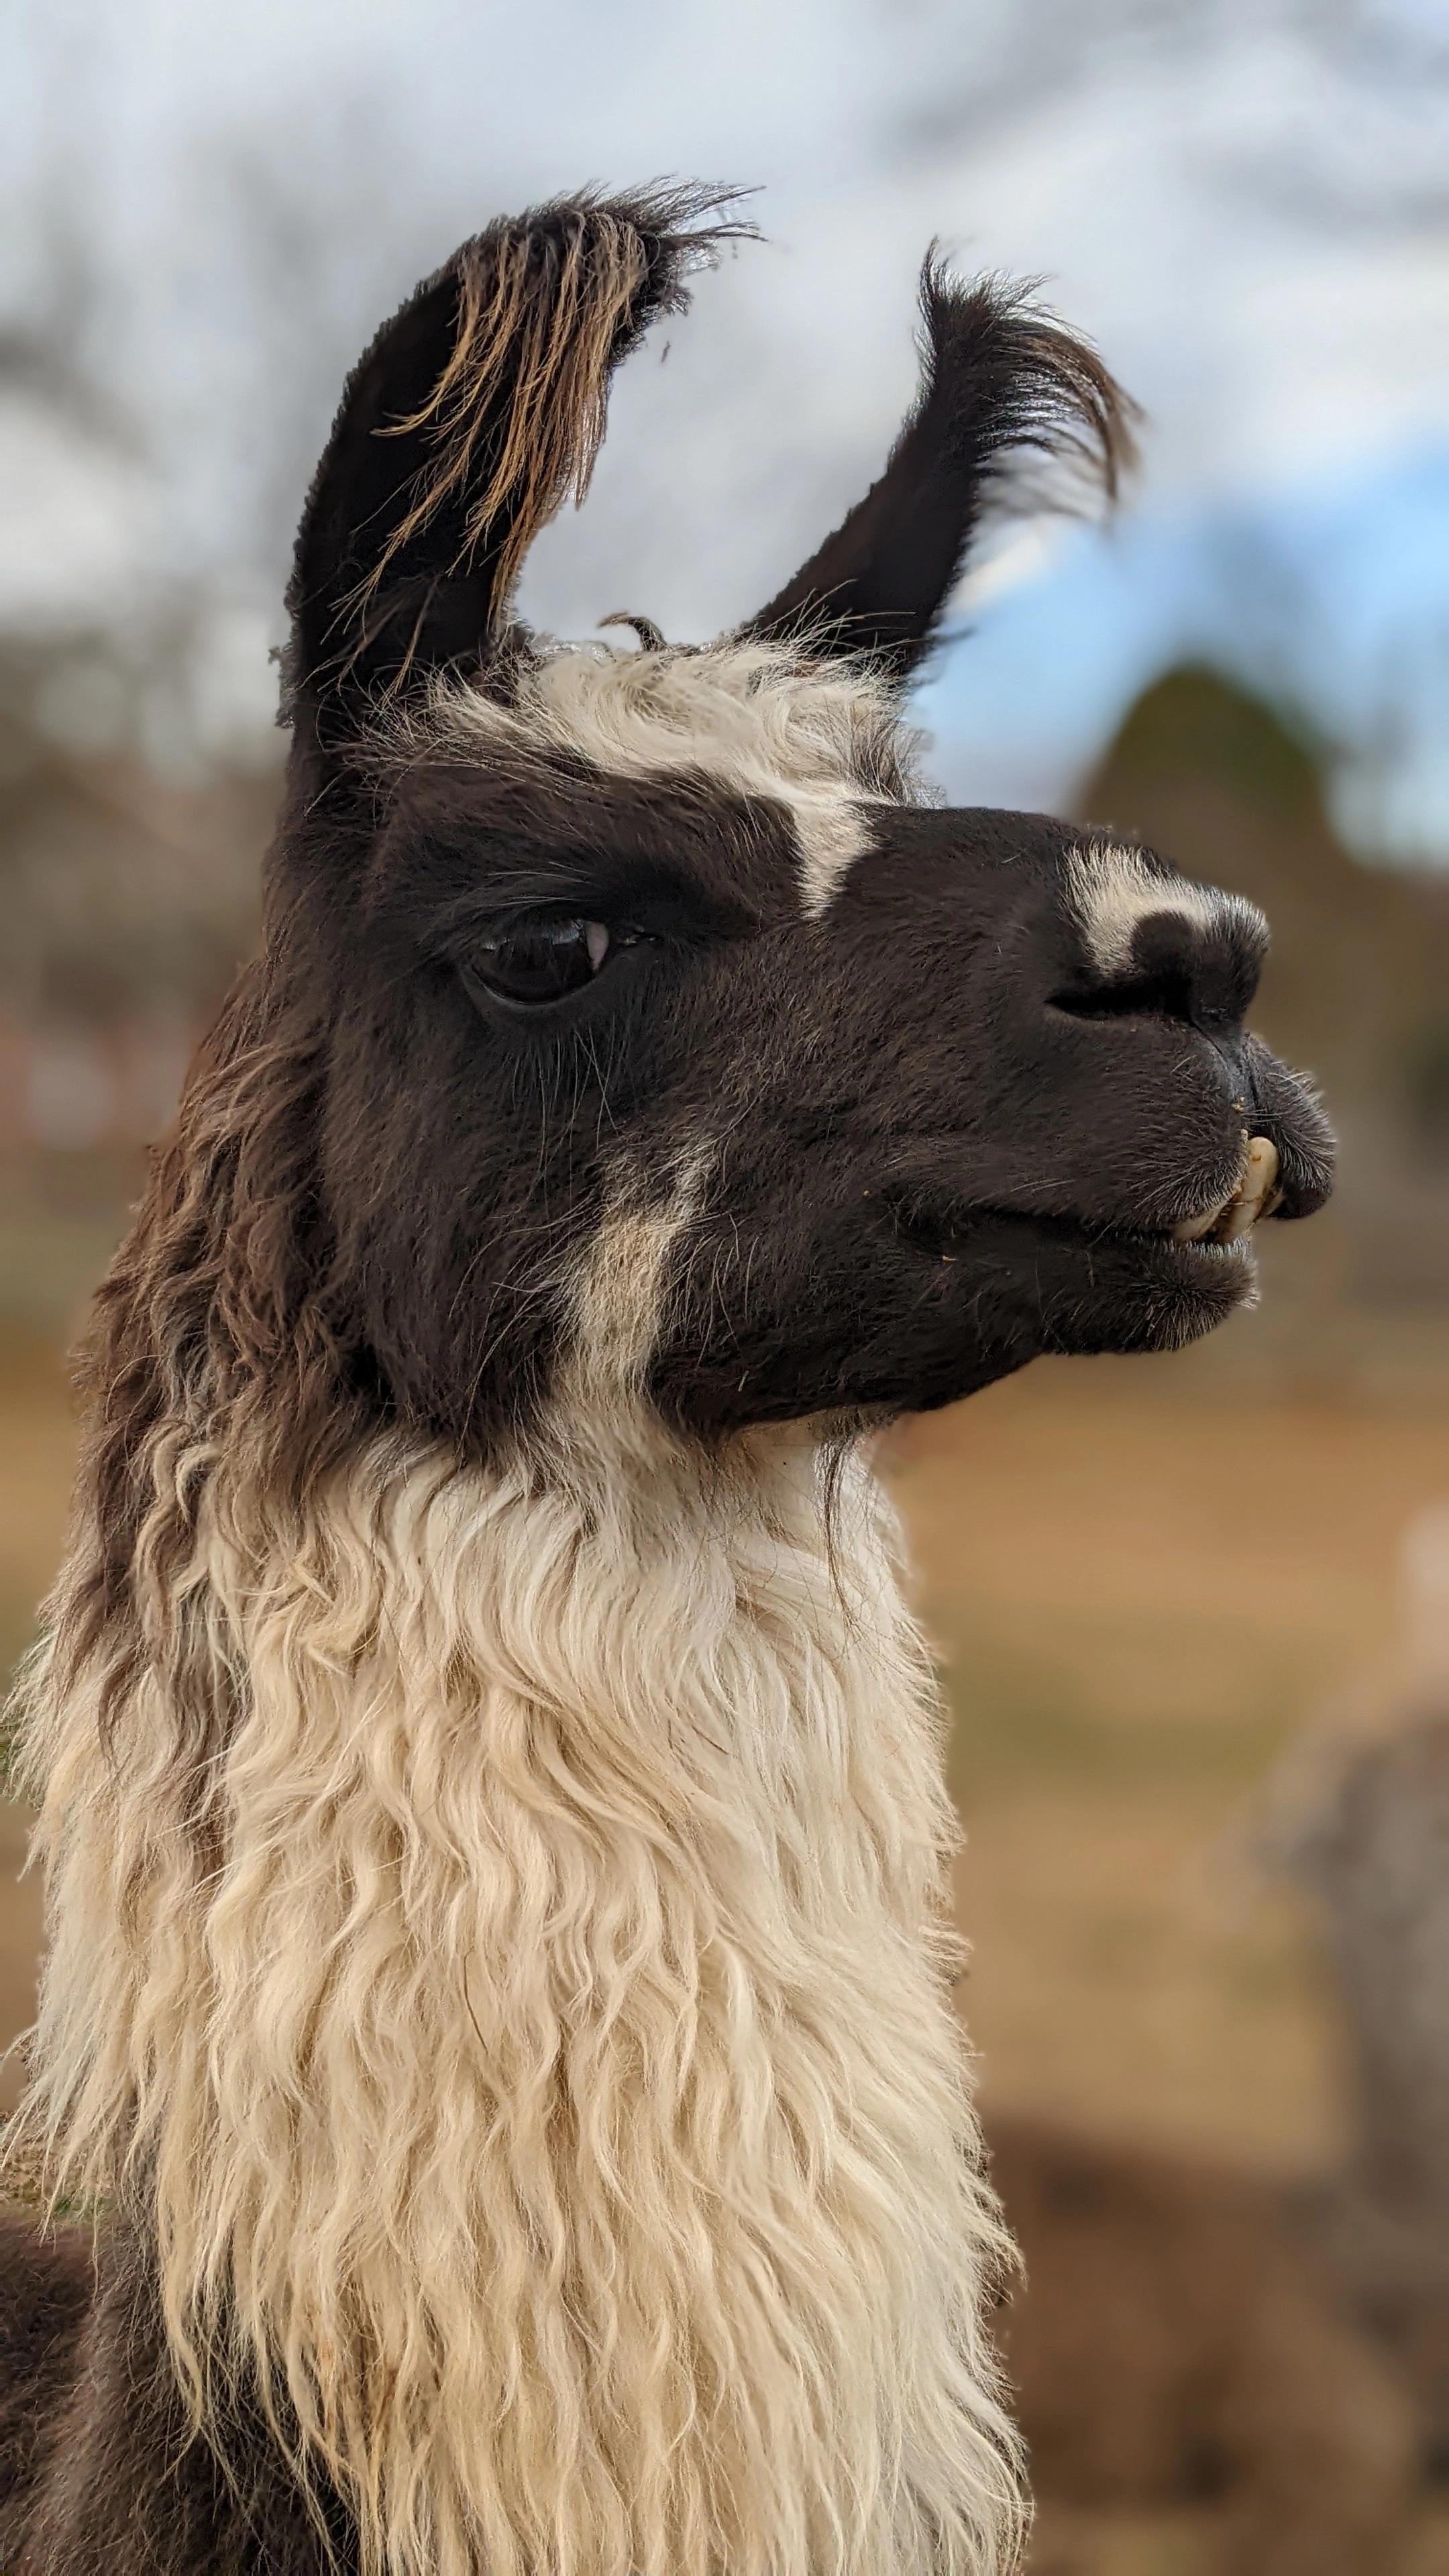 A portrait image of a llama named Cricket